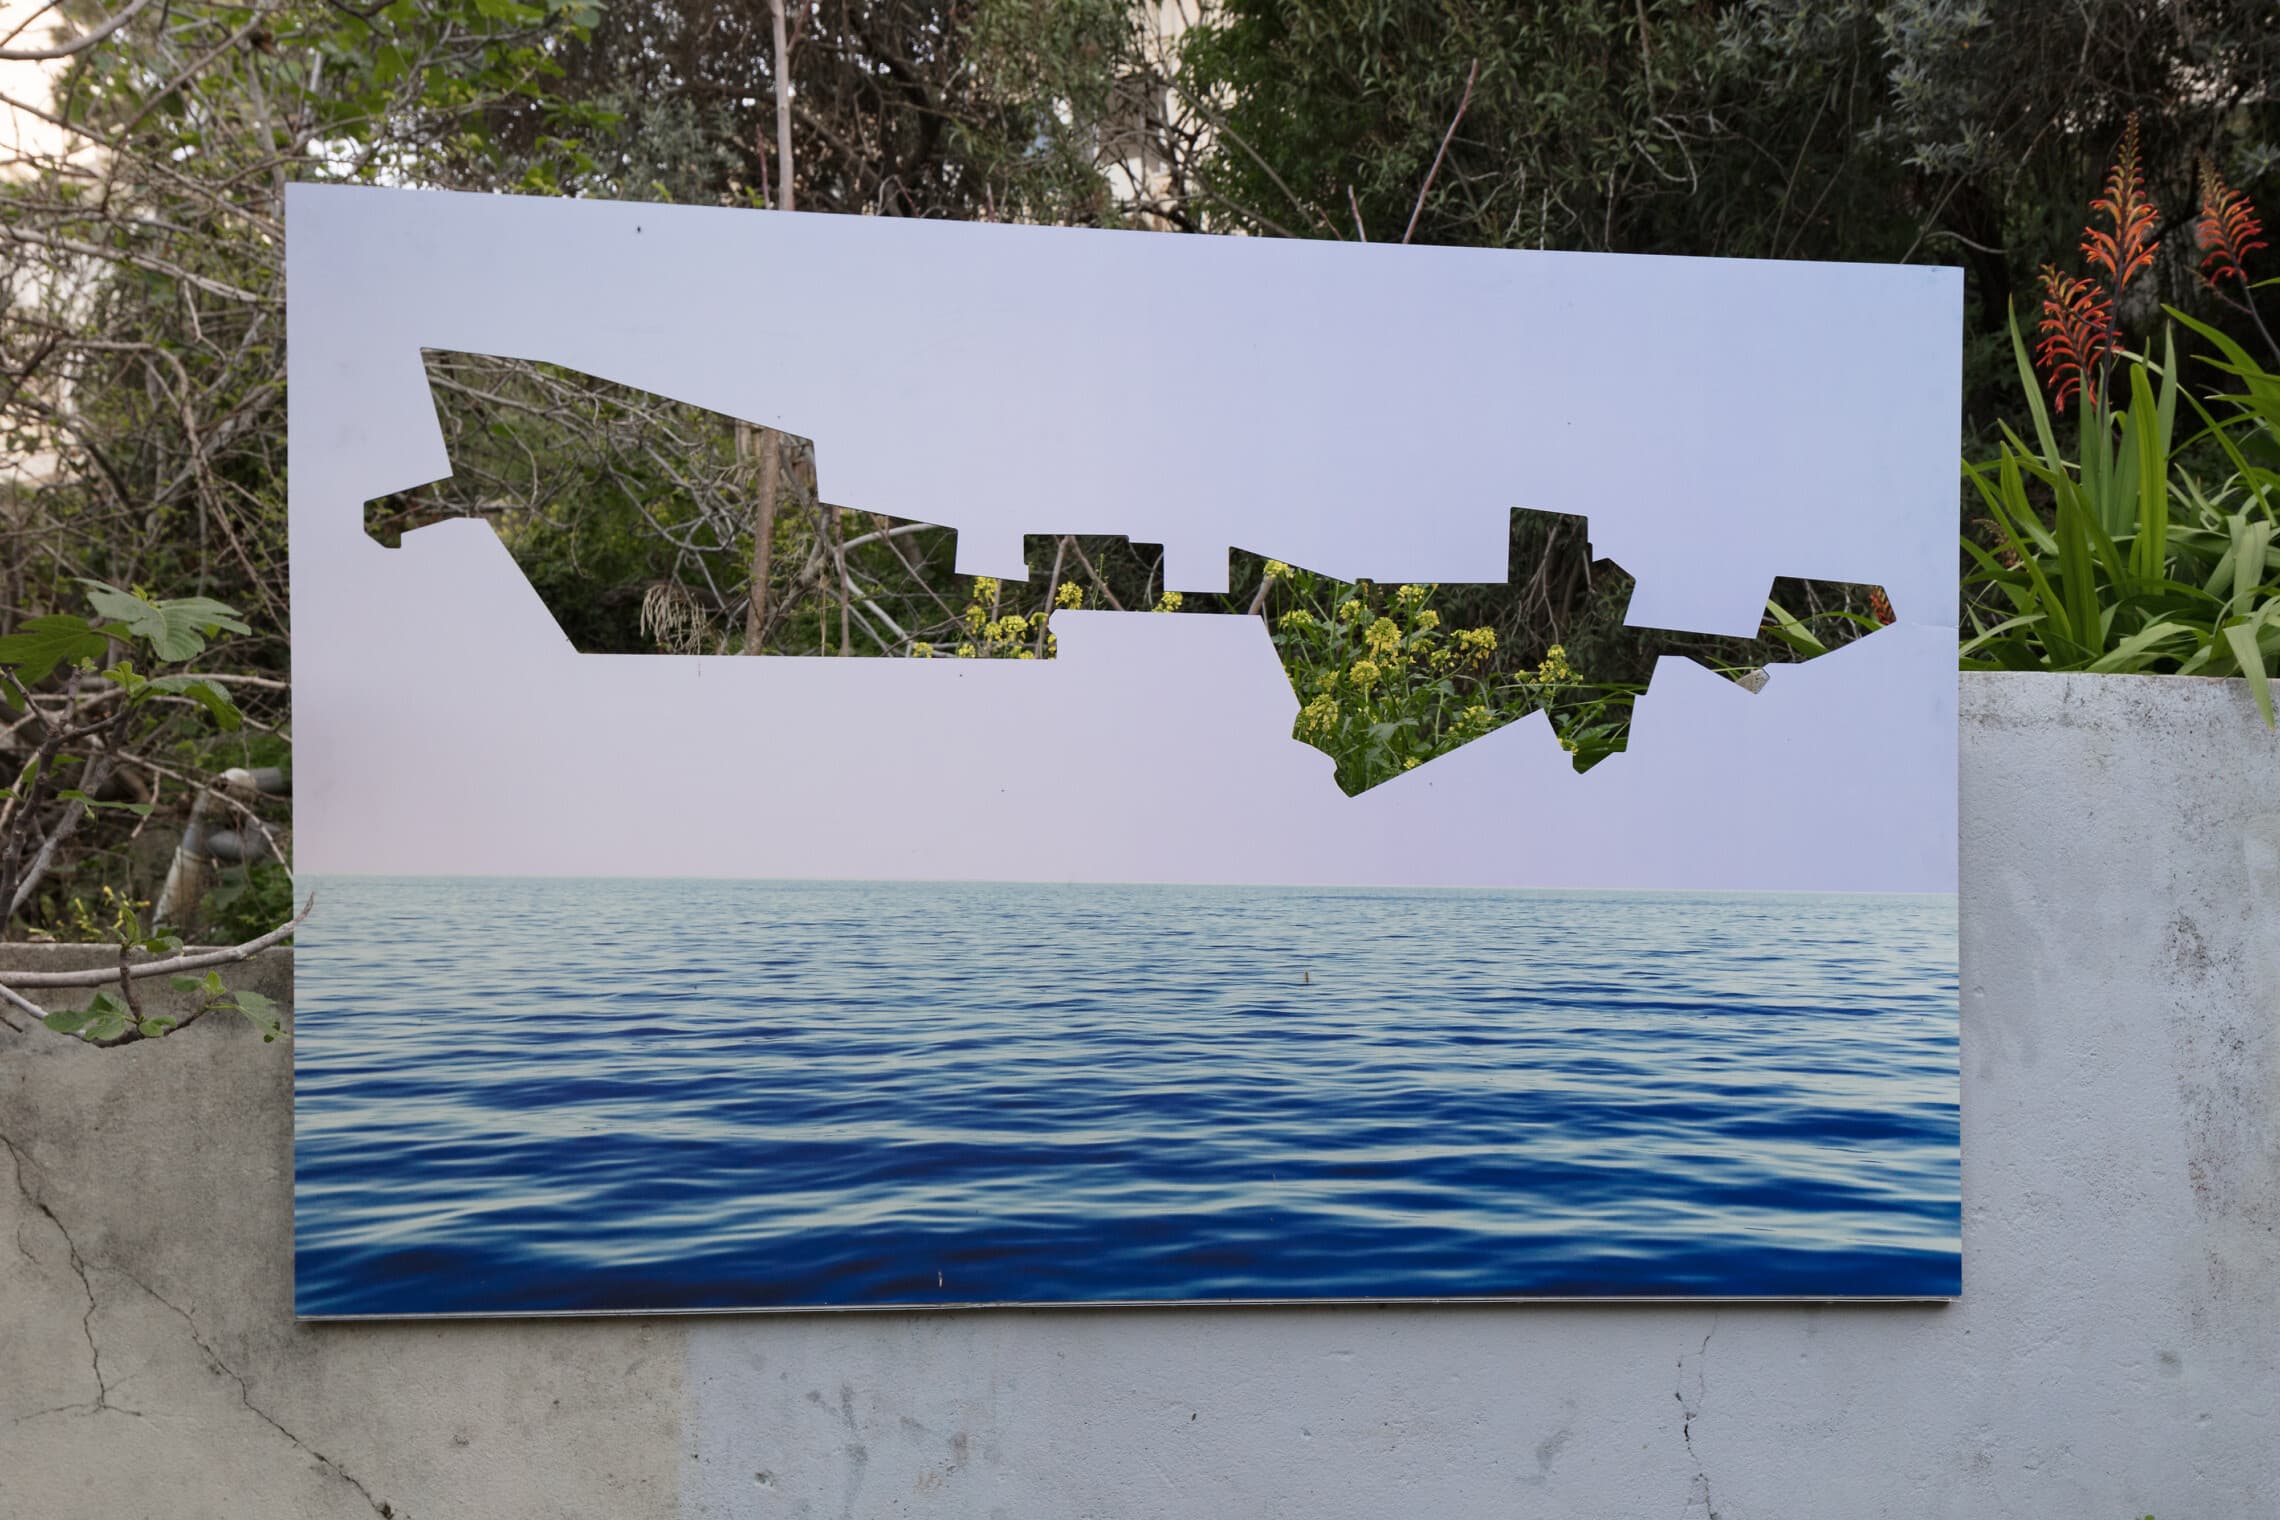 &quot;Landscape / Escape&quot;, עבודה של חן צרפתי, חיפה אפריל 2022 (צילום: אורית סימן טוב)